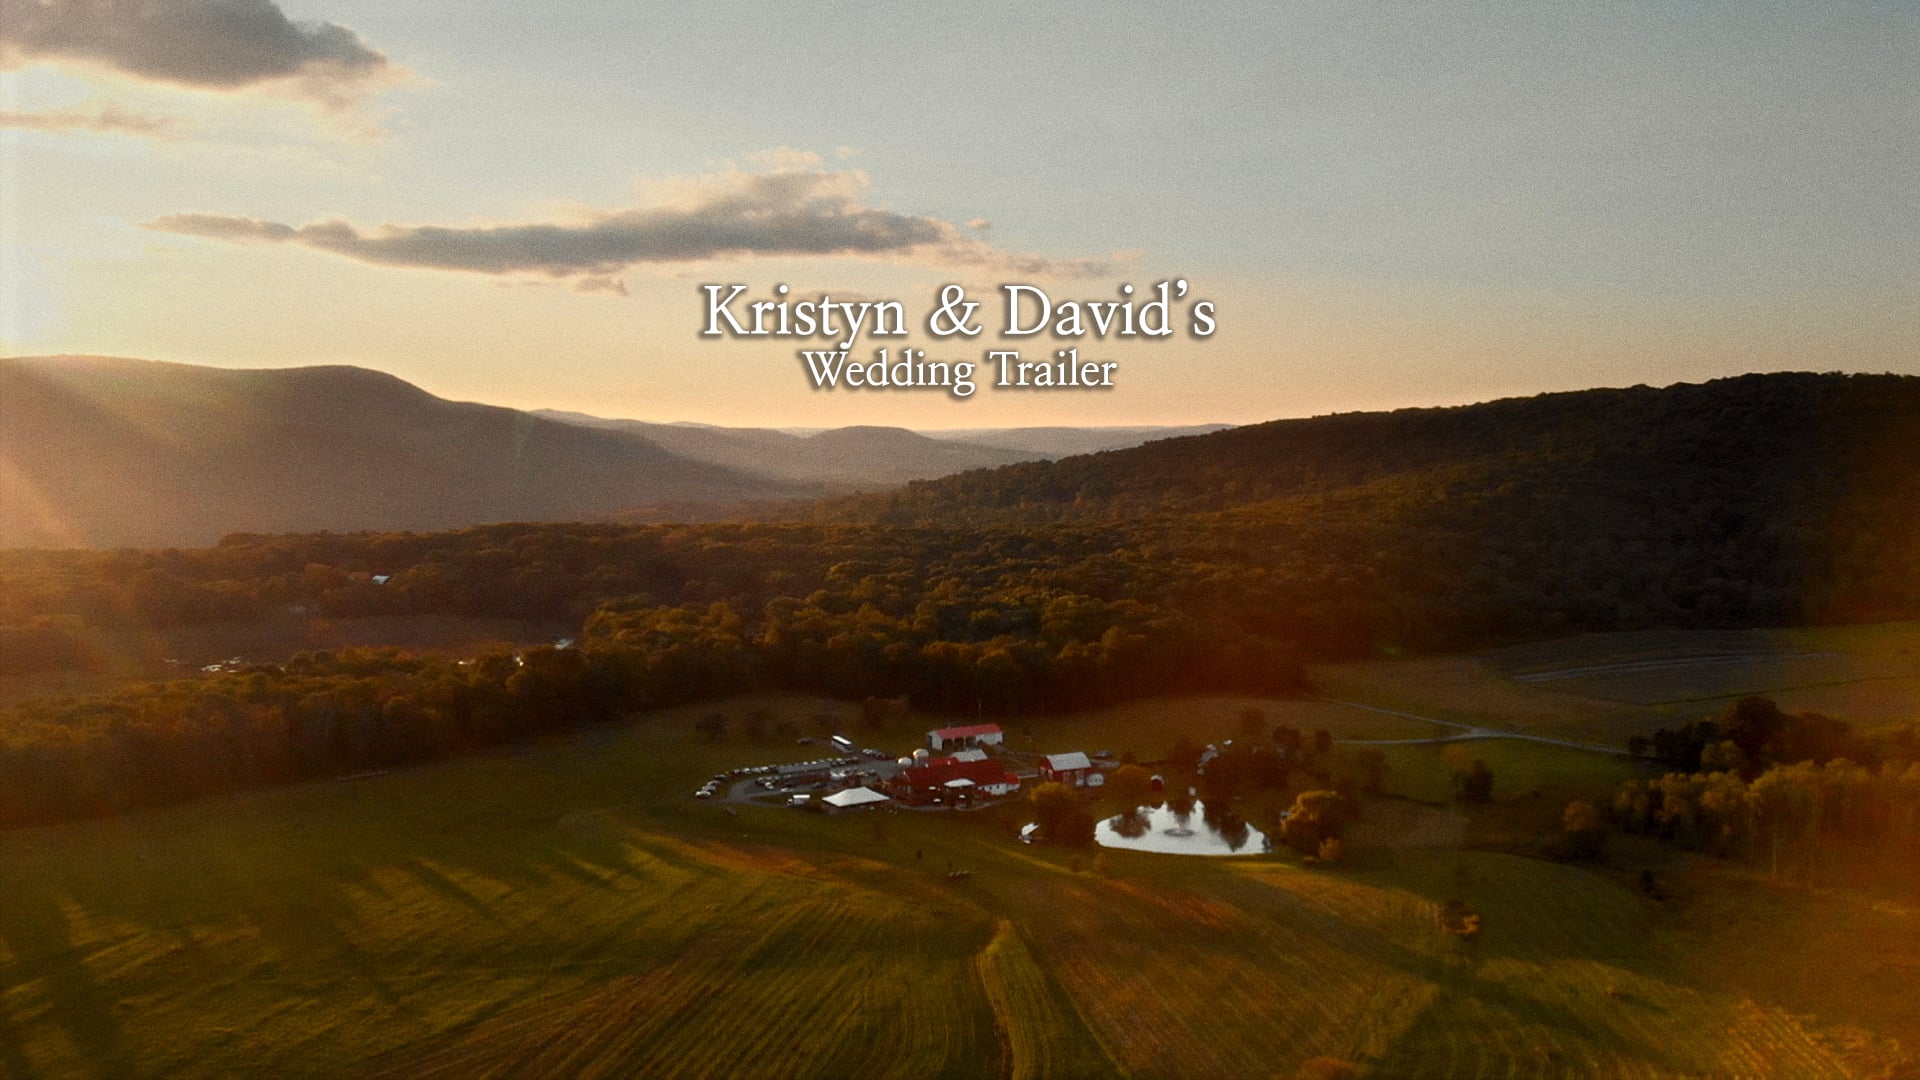 Kristyn & David's Wedding Trailer